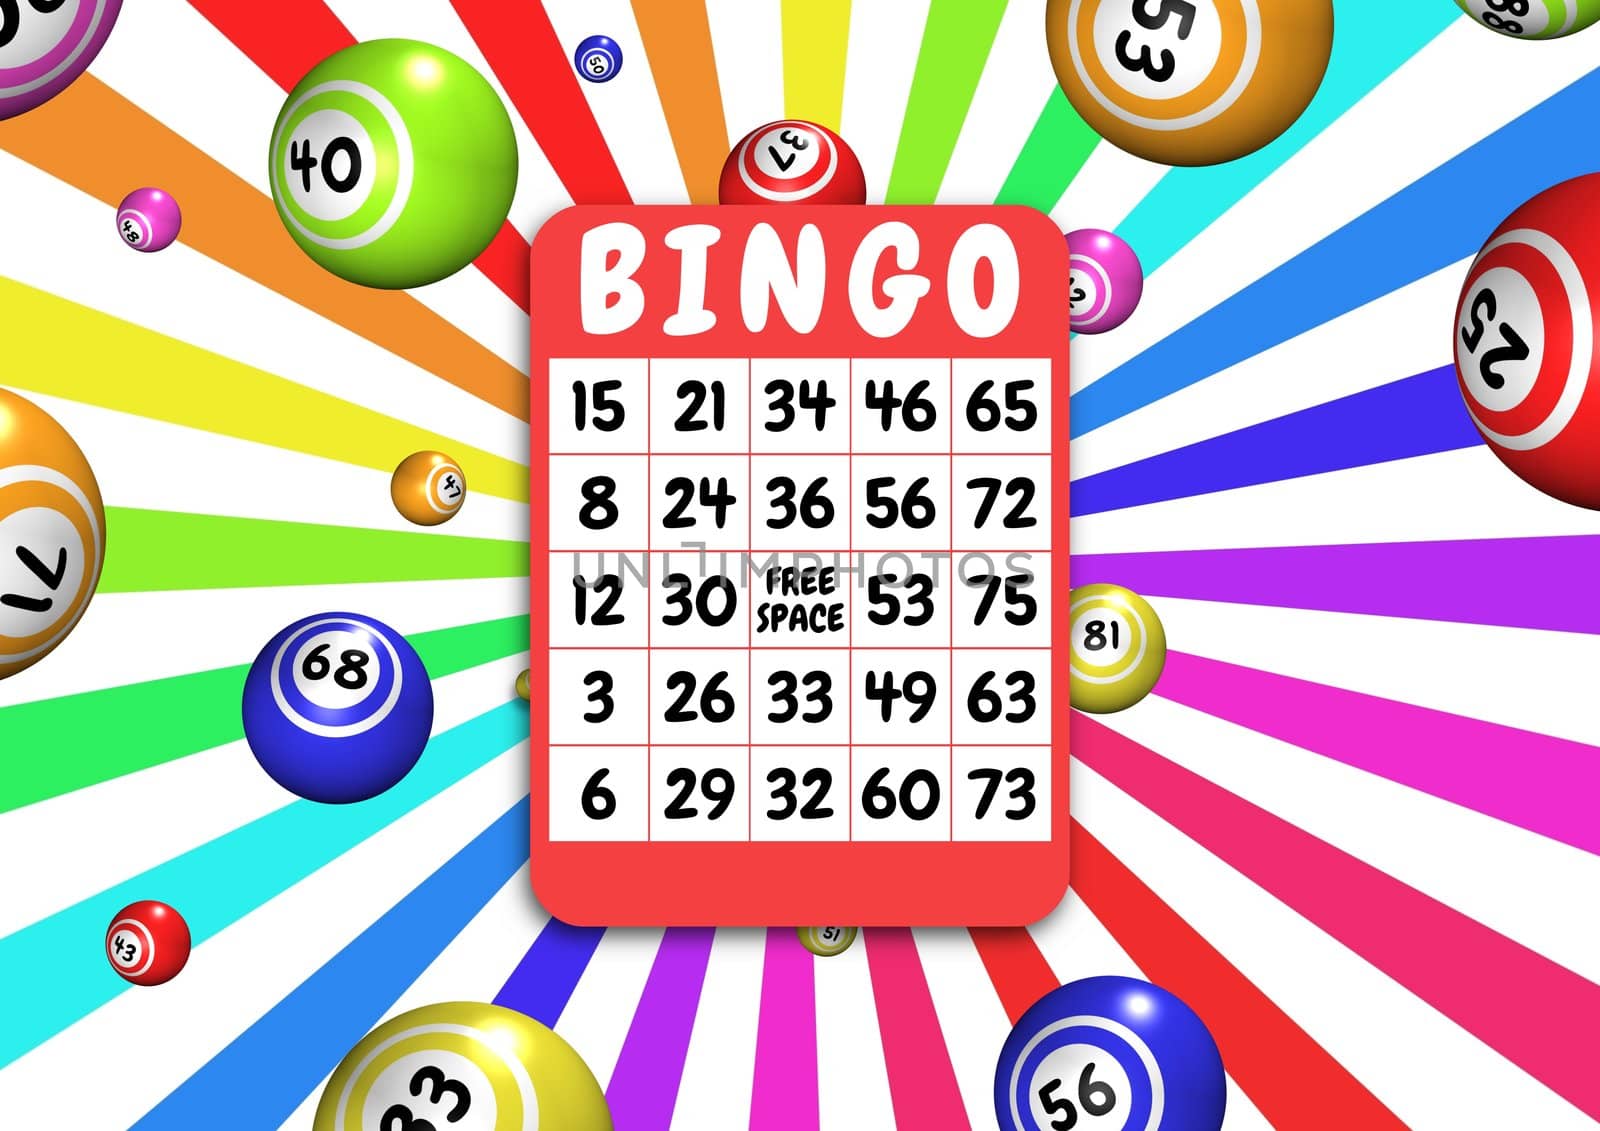 Illustration of bingo balls and card